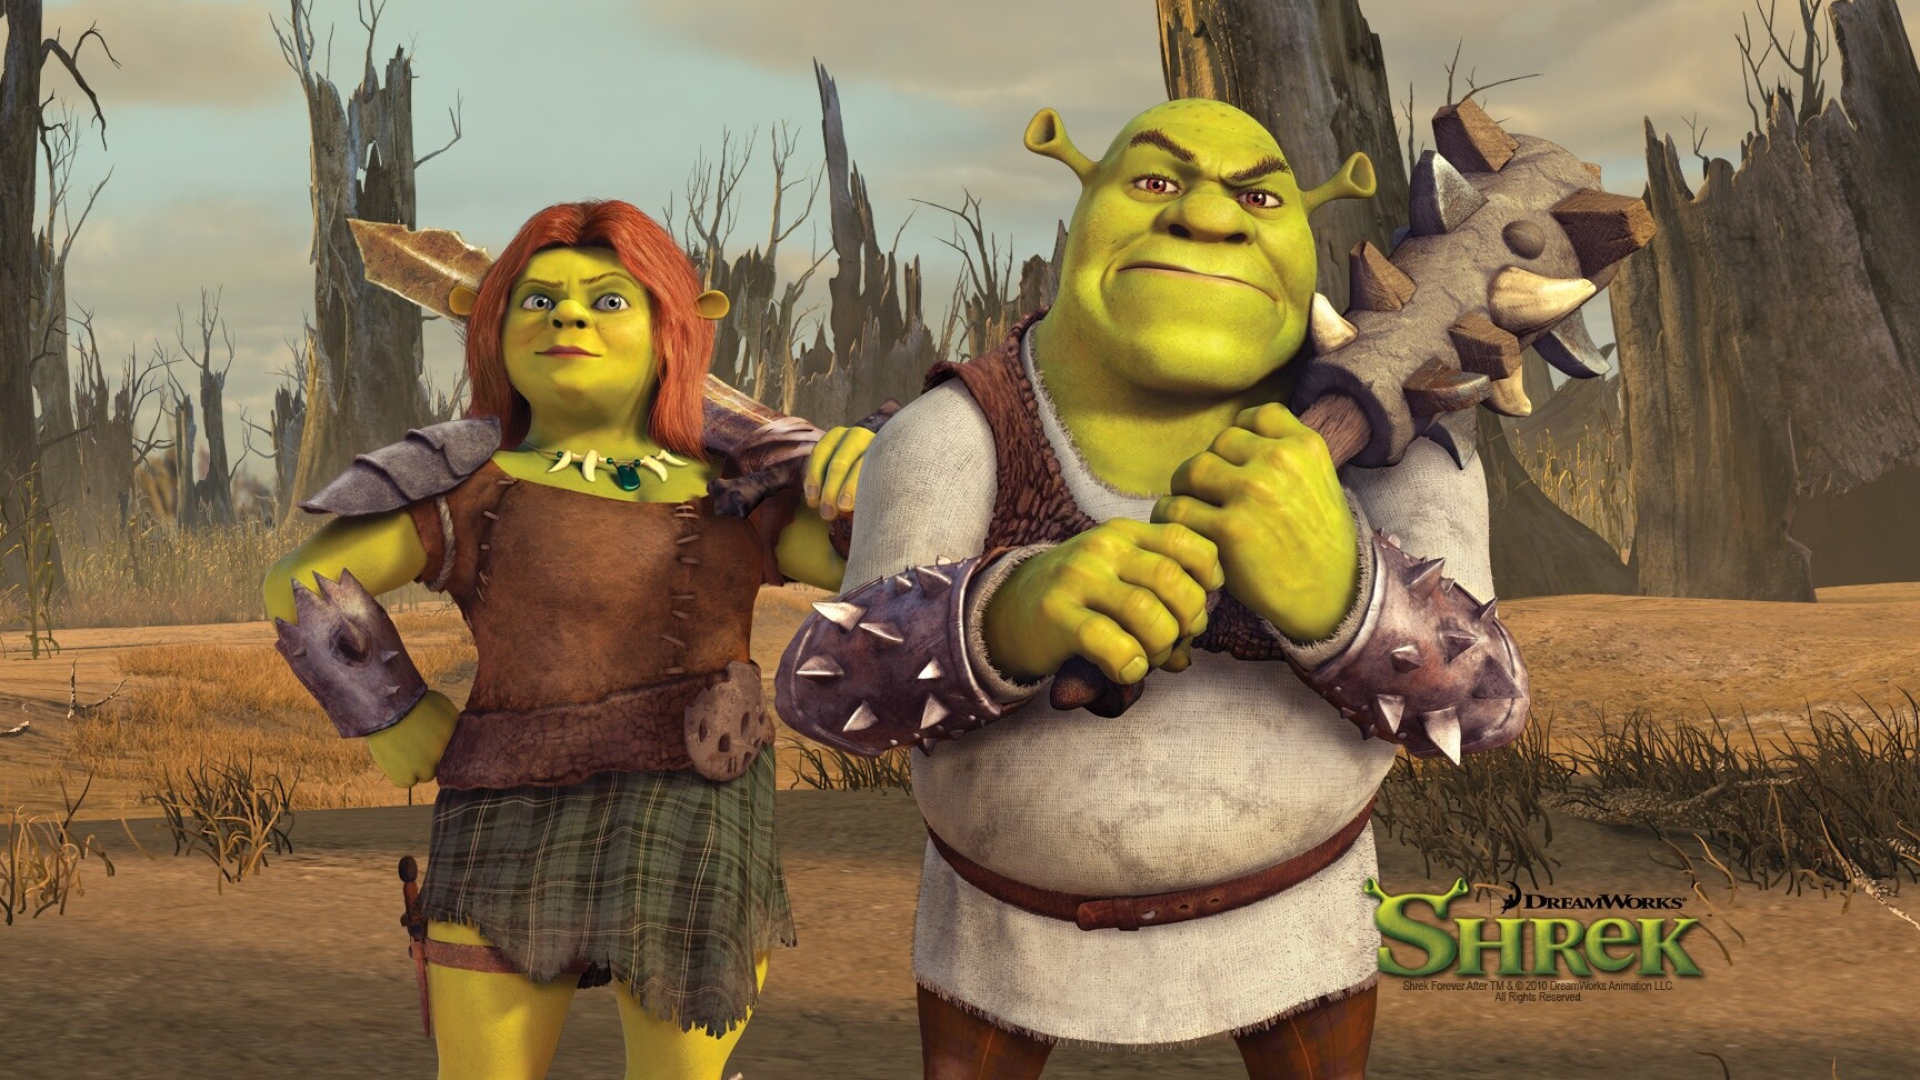 Shrek Fiona wallpaper, Oger characters, Fairy tale setting, High-quality image, 1920x1080 Full HD Desktop